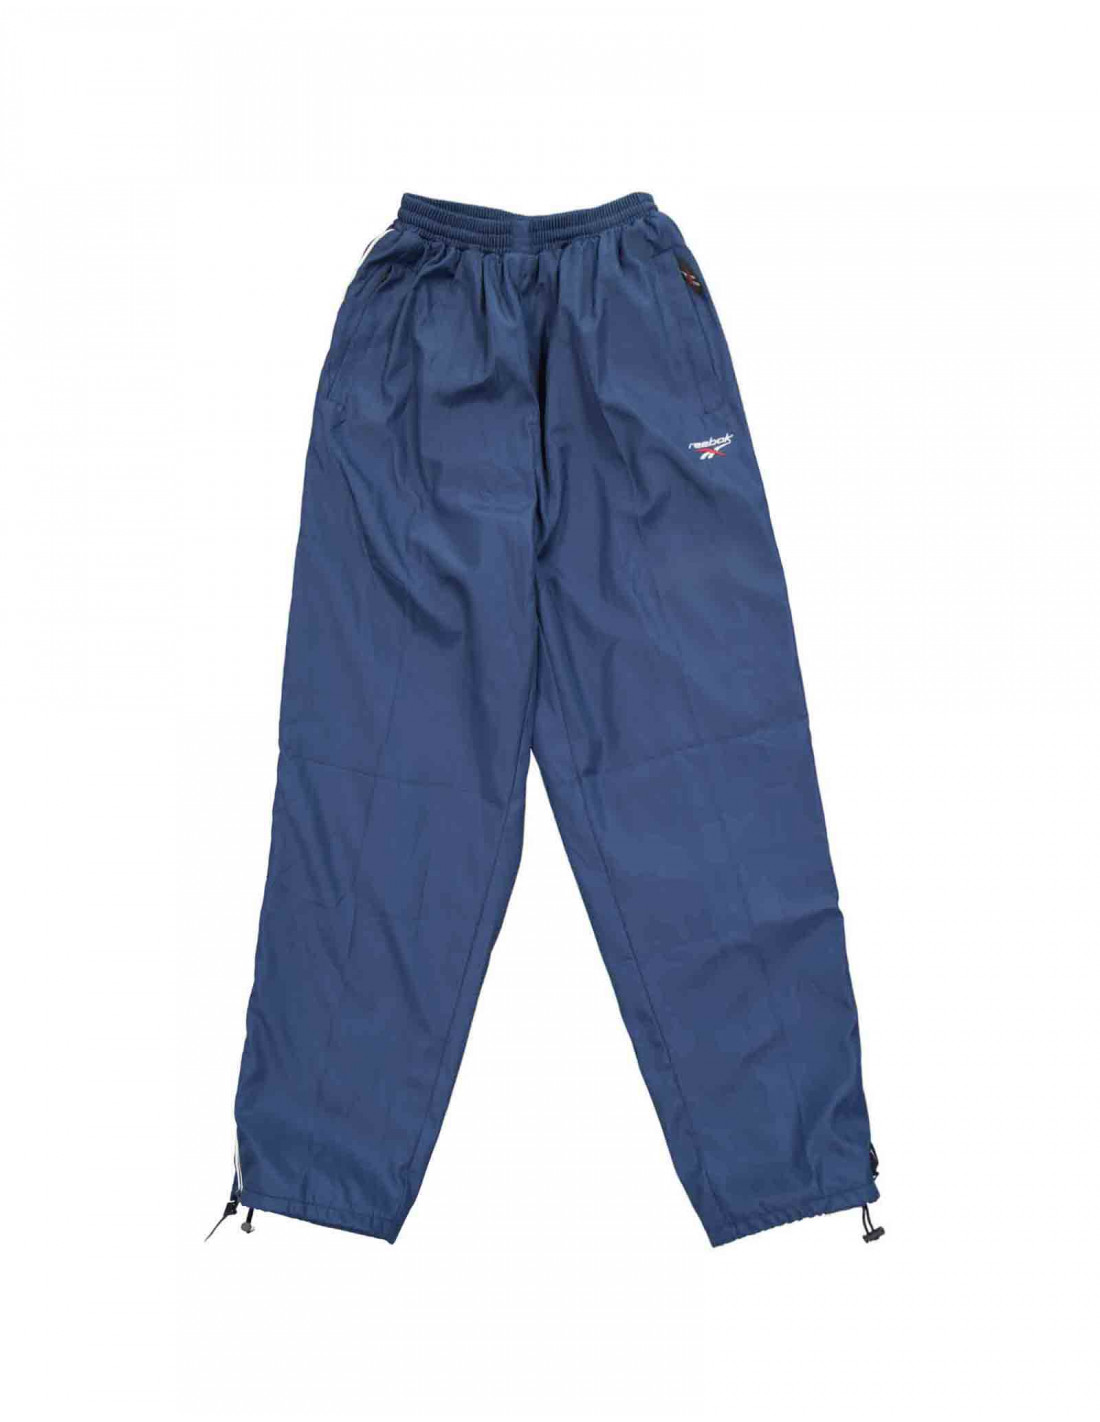 Buy Navy Blue Track Pants for Men by Reebok Online  Ajiocom